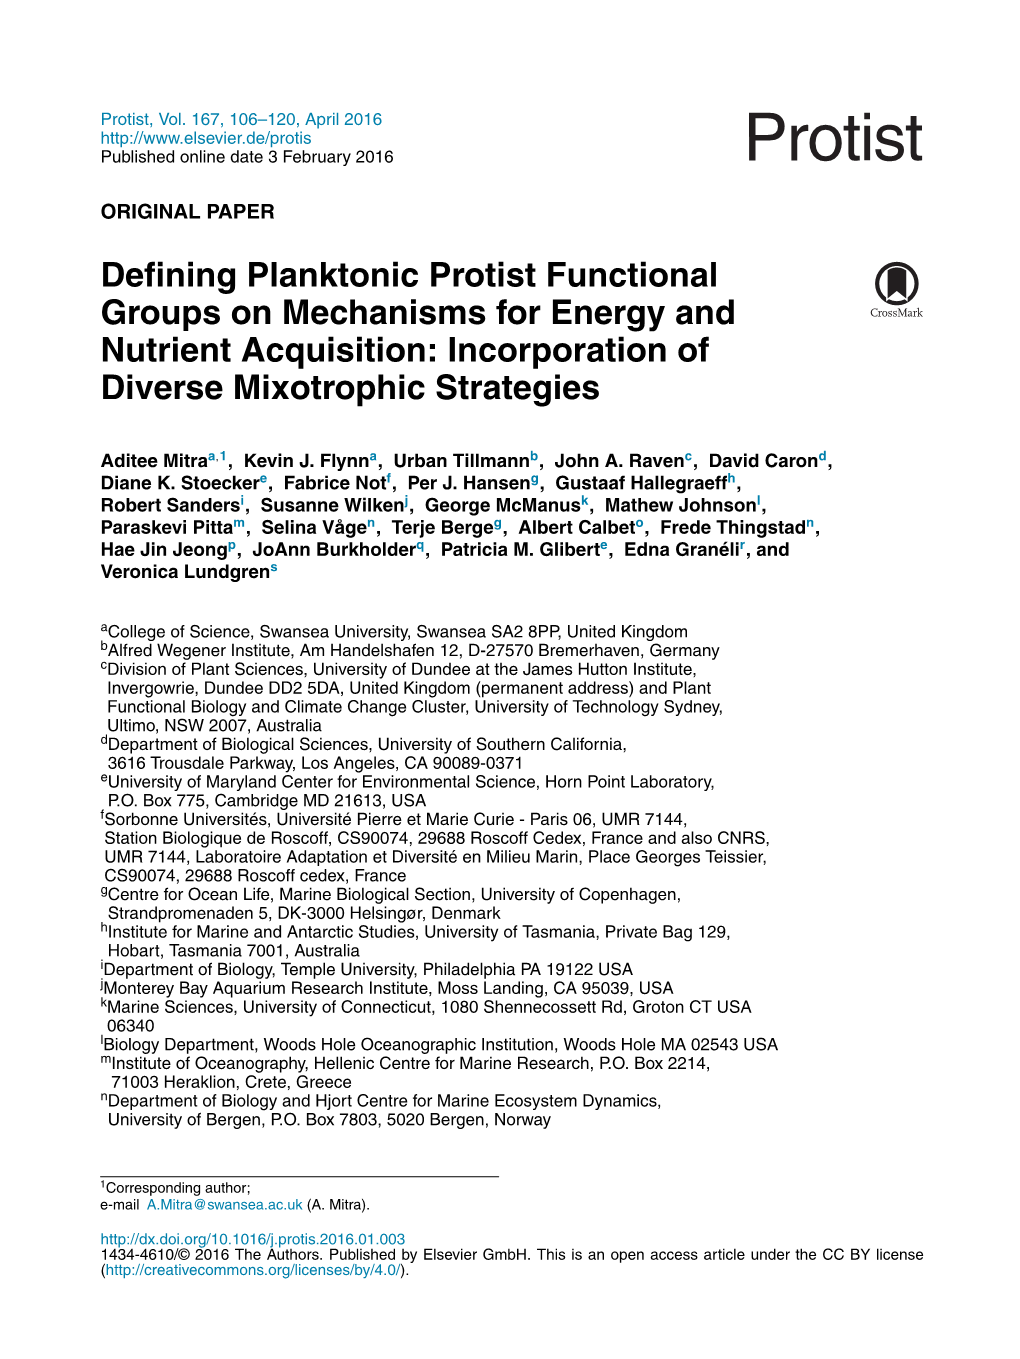 Defining Planktonic Protist Functional Groups on Mechanisms for Energy